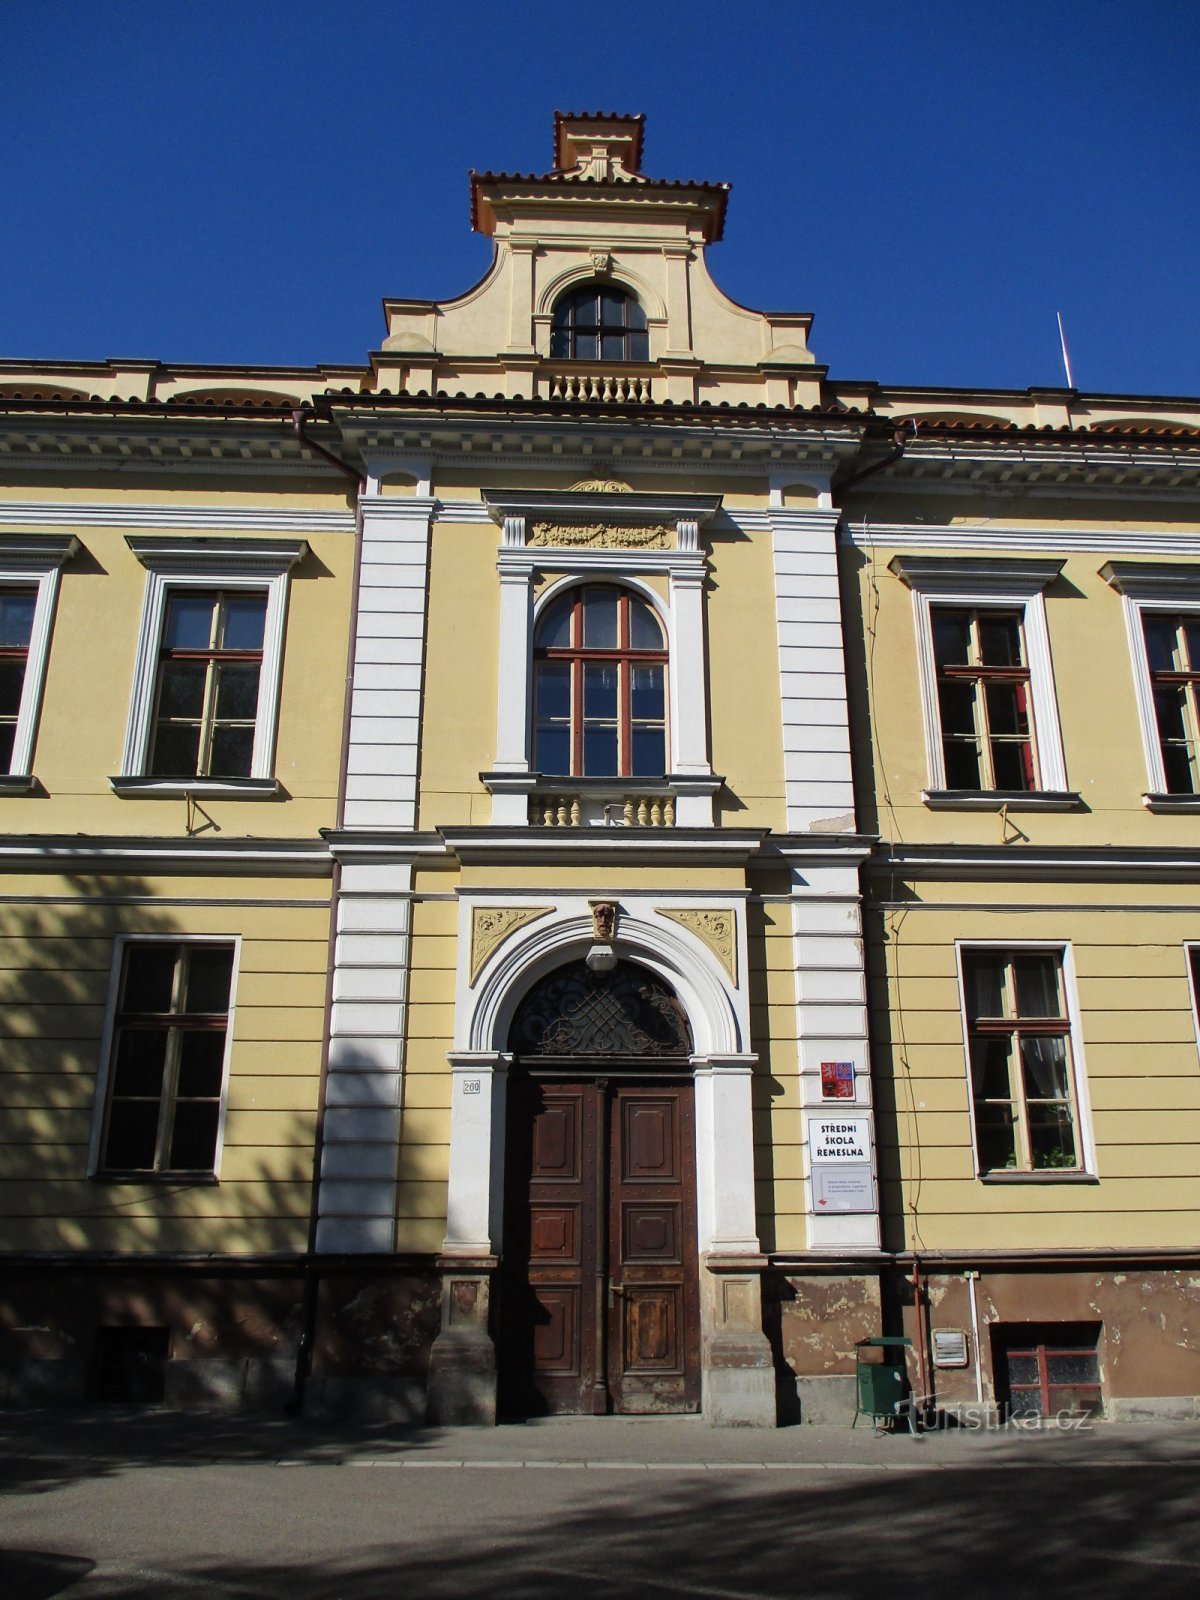 Srednja strokovna šola Jaroměř (22.4.2020. XNUMX. XNUMX)